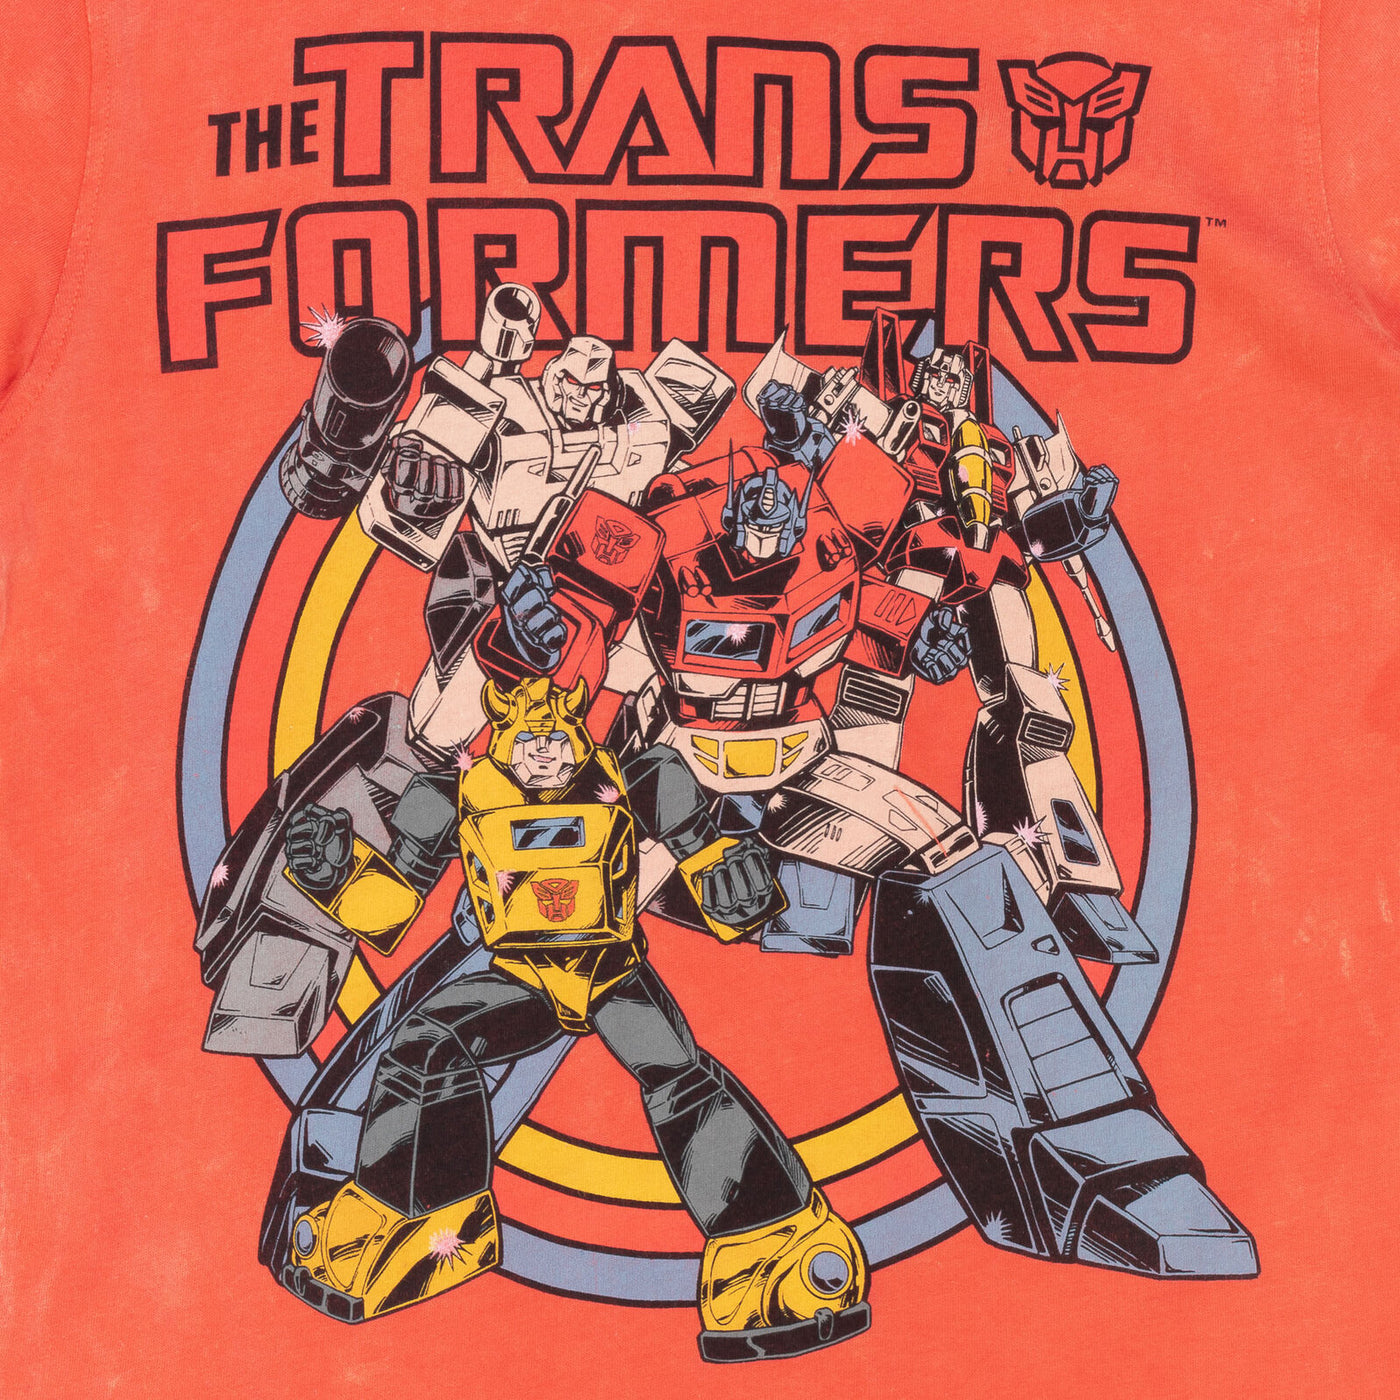 Transformers 2 Pack T-Shirts